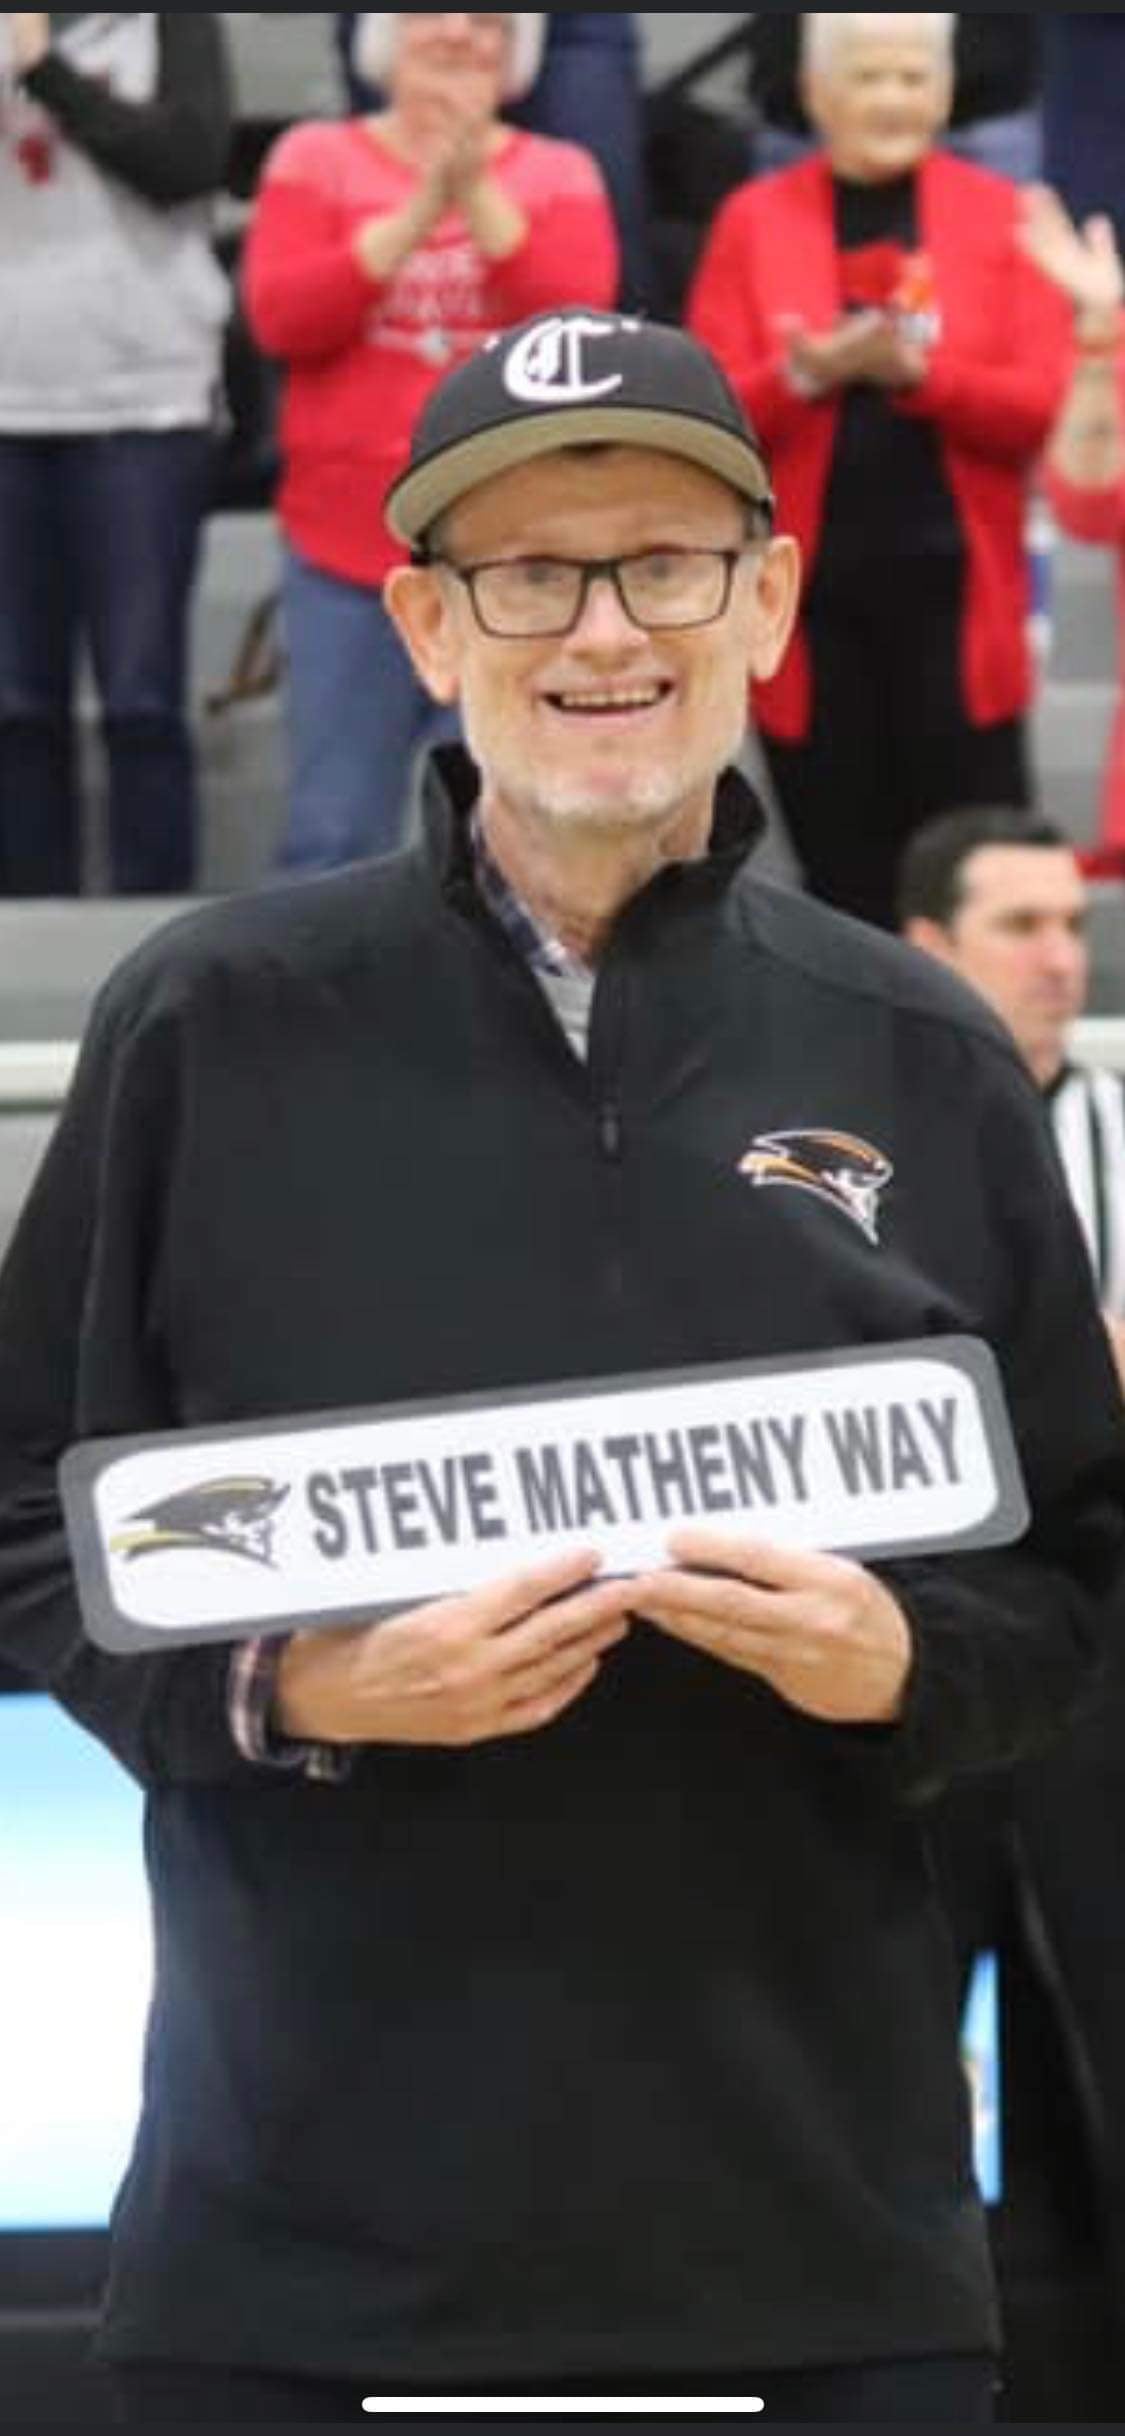 Steve Matheny